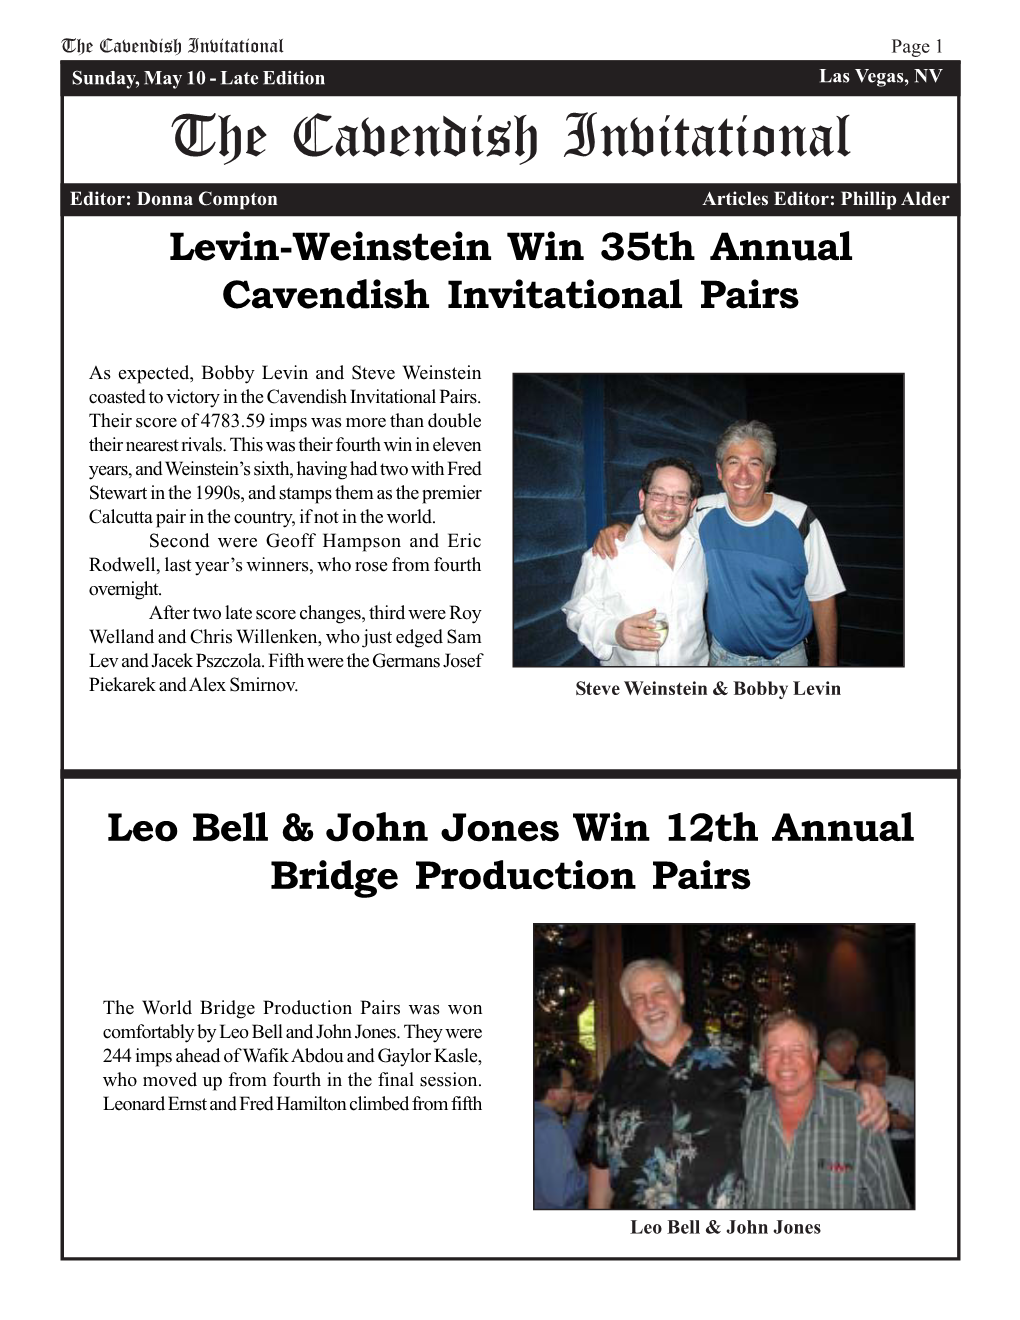 The Cavendish Invitational Page 1 Sunday, May 10 - Late Edition Las Vegas, NV the Cavendish Invitational